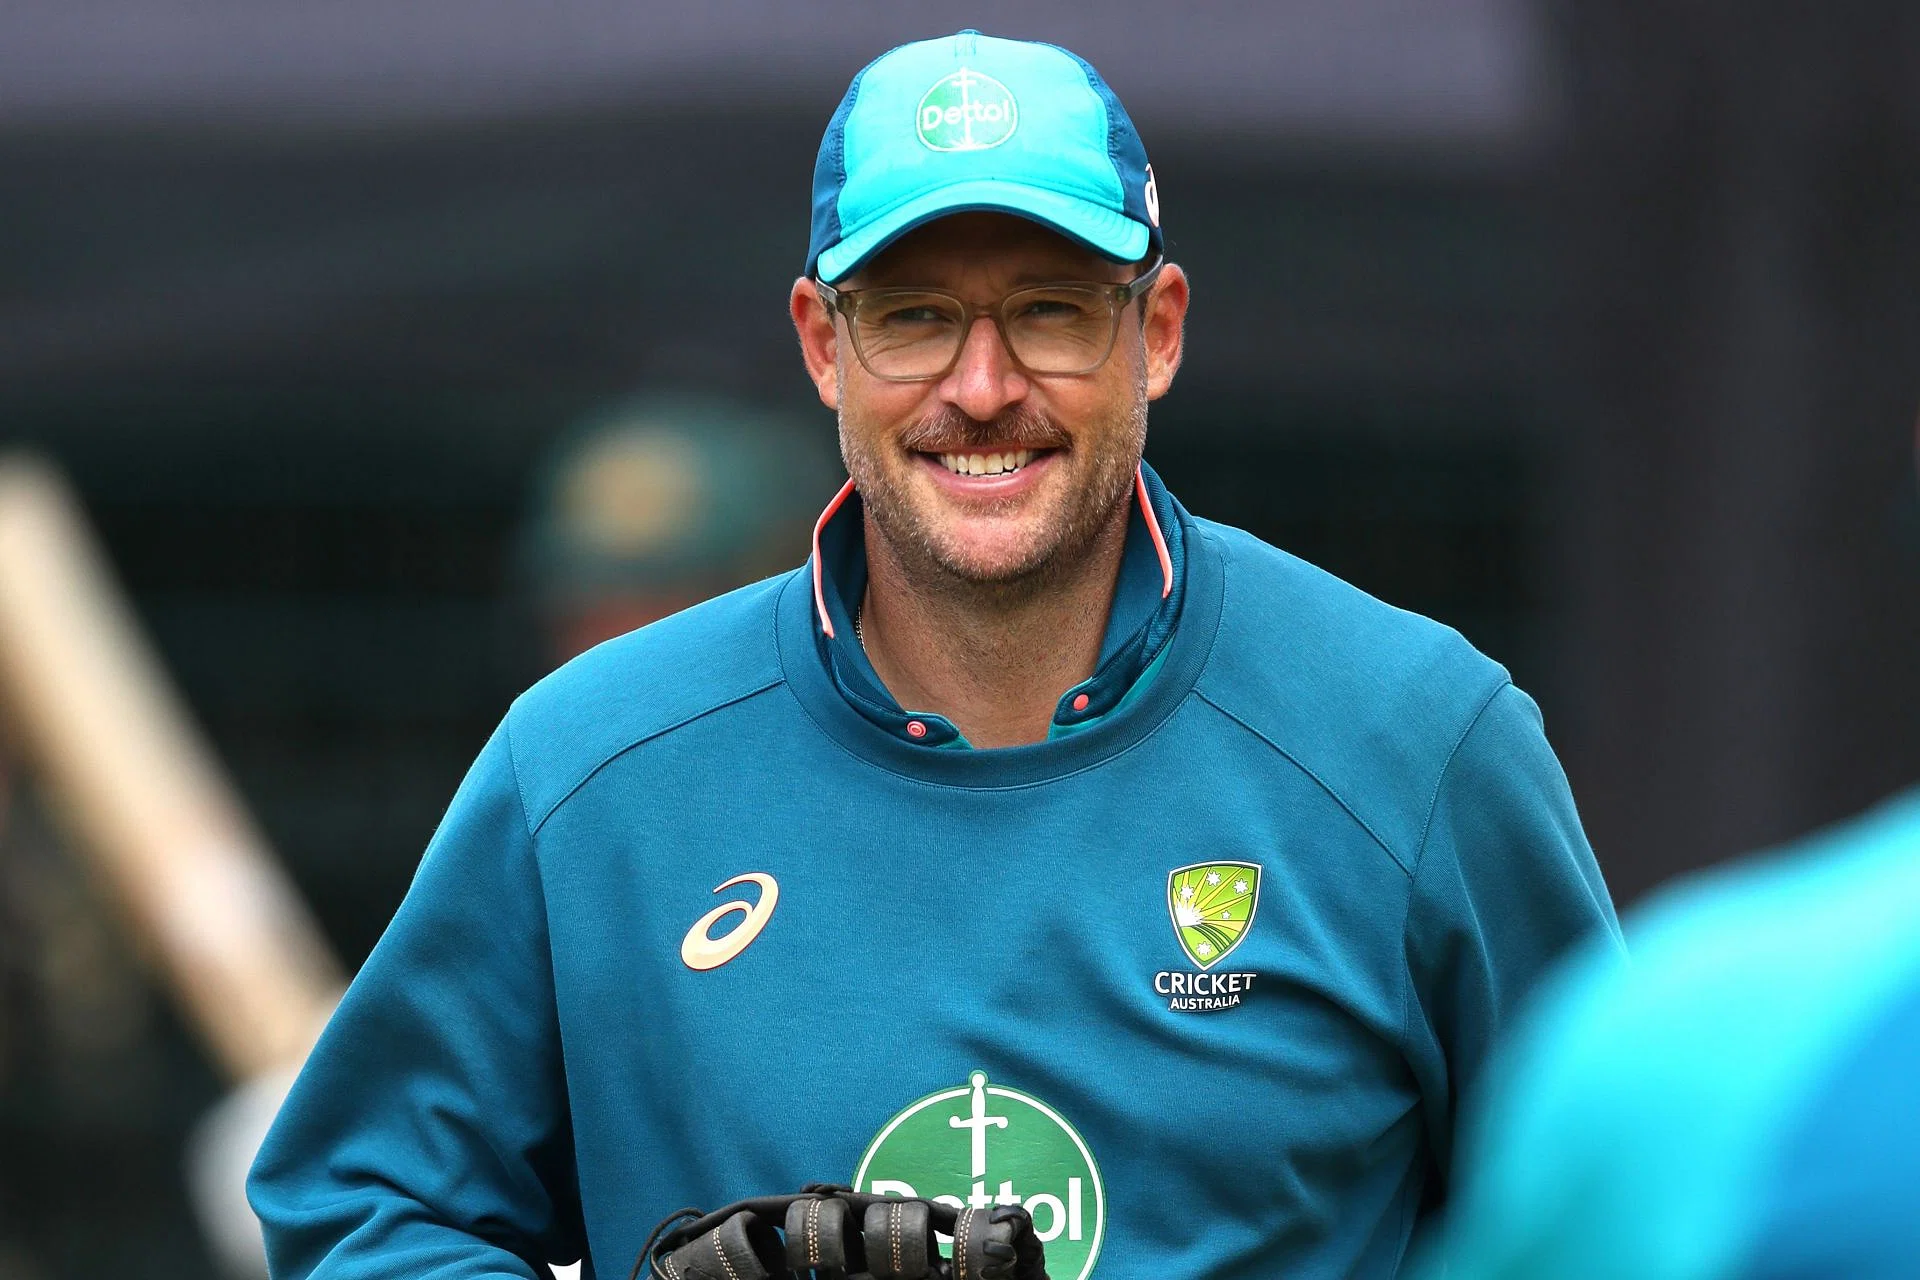 "Happy to be home": SRH head coach Daniel Vettori on CSK clash in Hyderabad